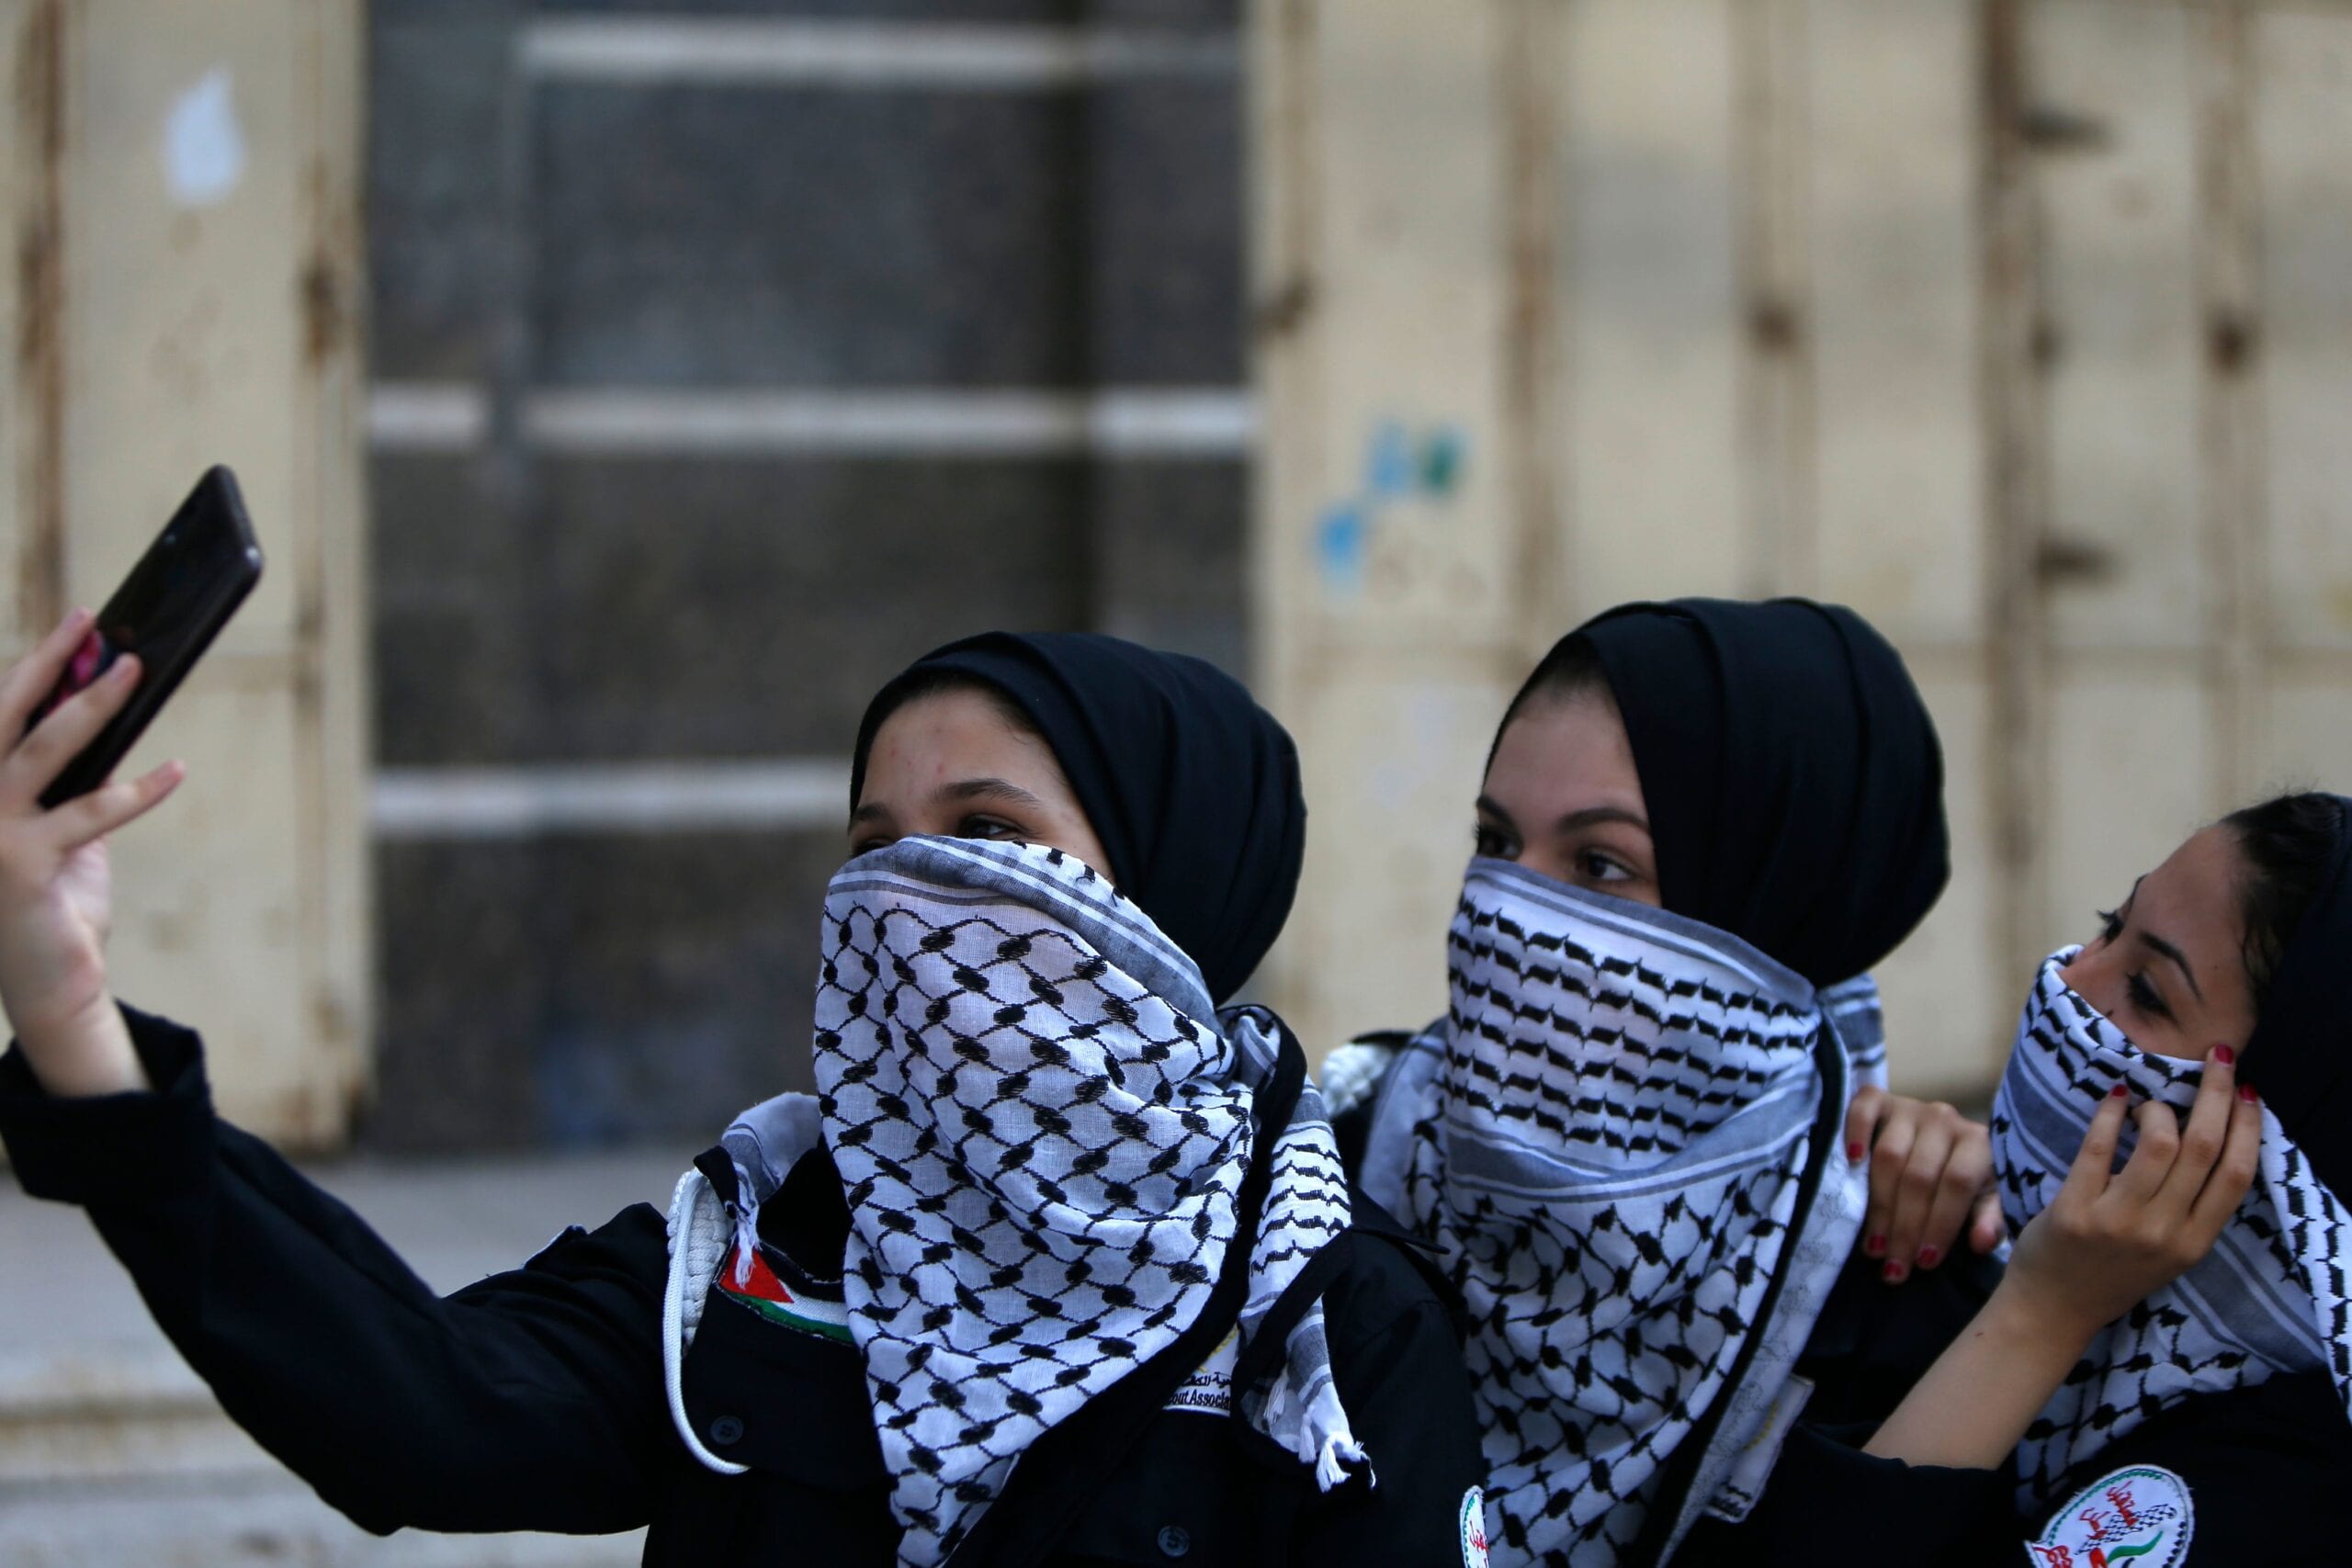 Google search results suggest Palestinian keffiyeh a symbol of terrorism